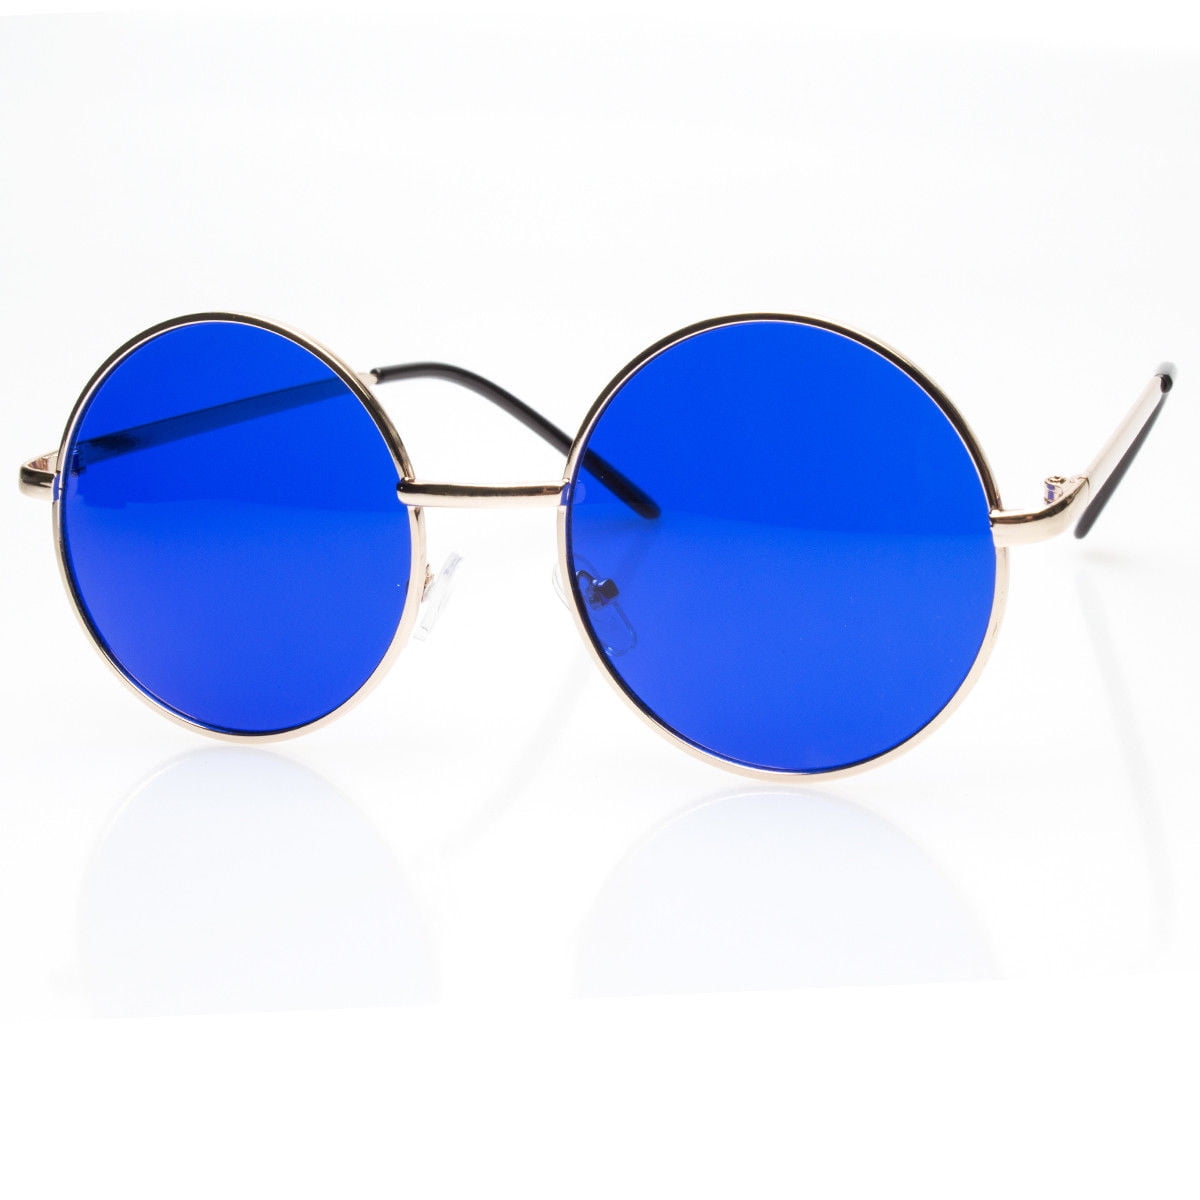 John Lennon Large Sunglasses Round Shades Silver Gold Frame Color Lens Retro New 